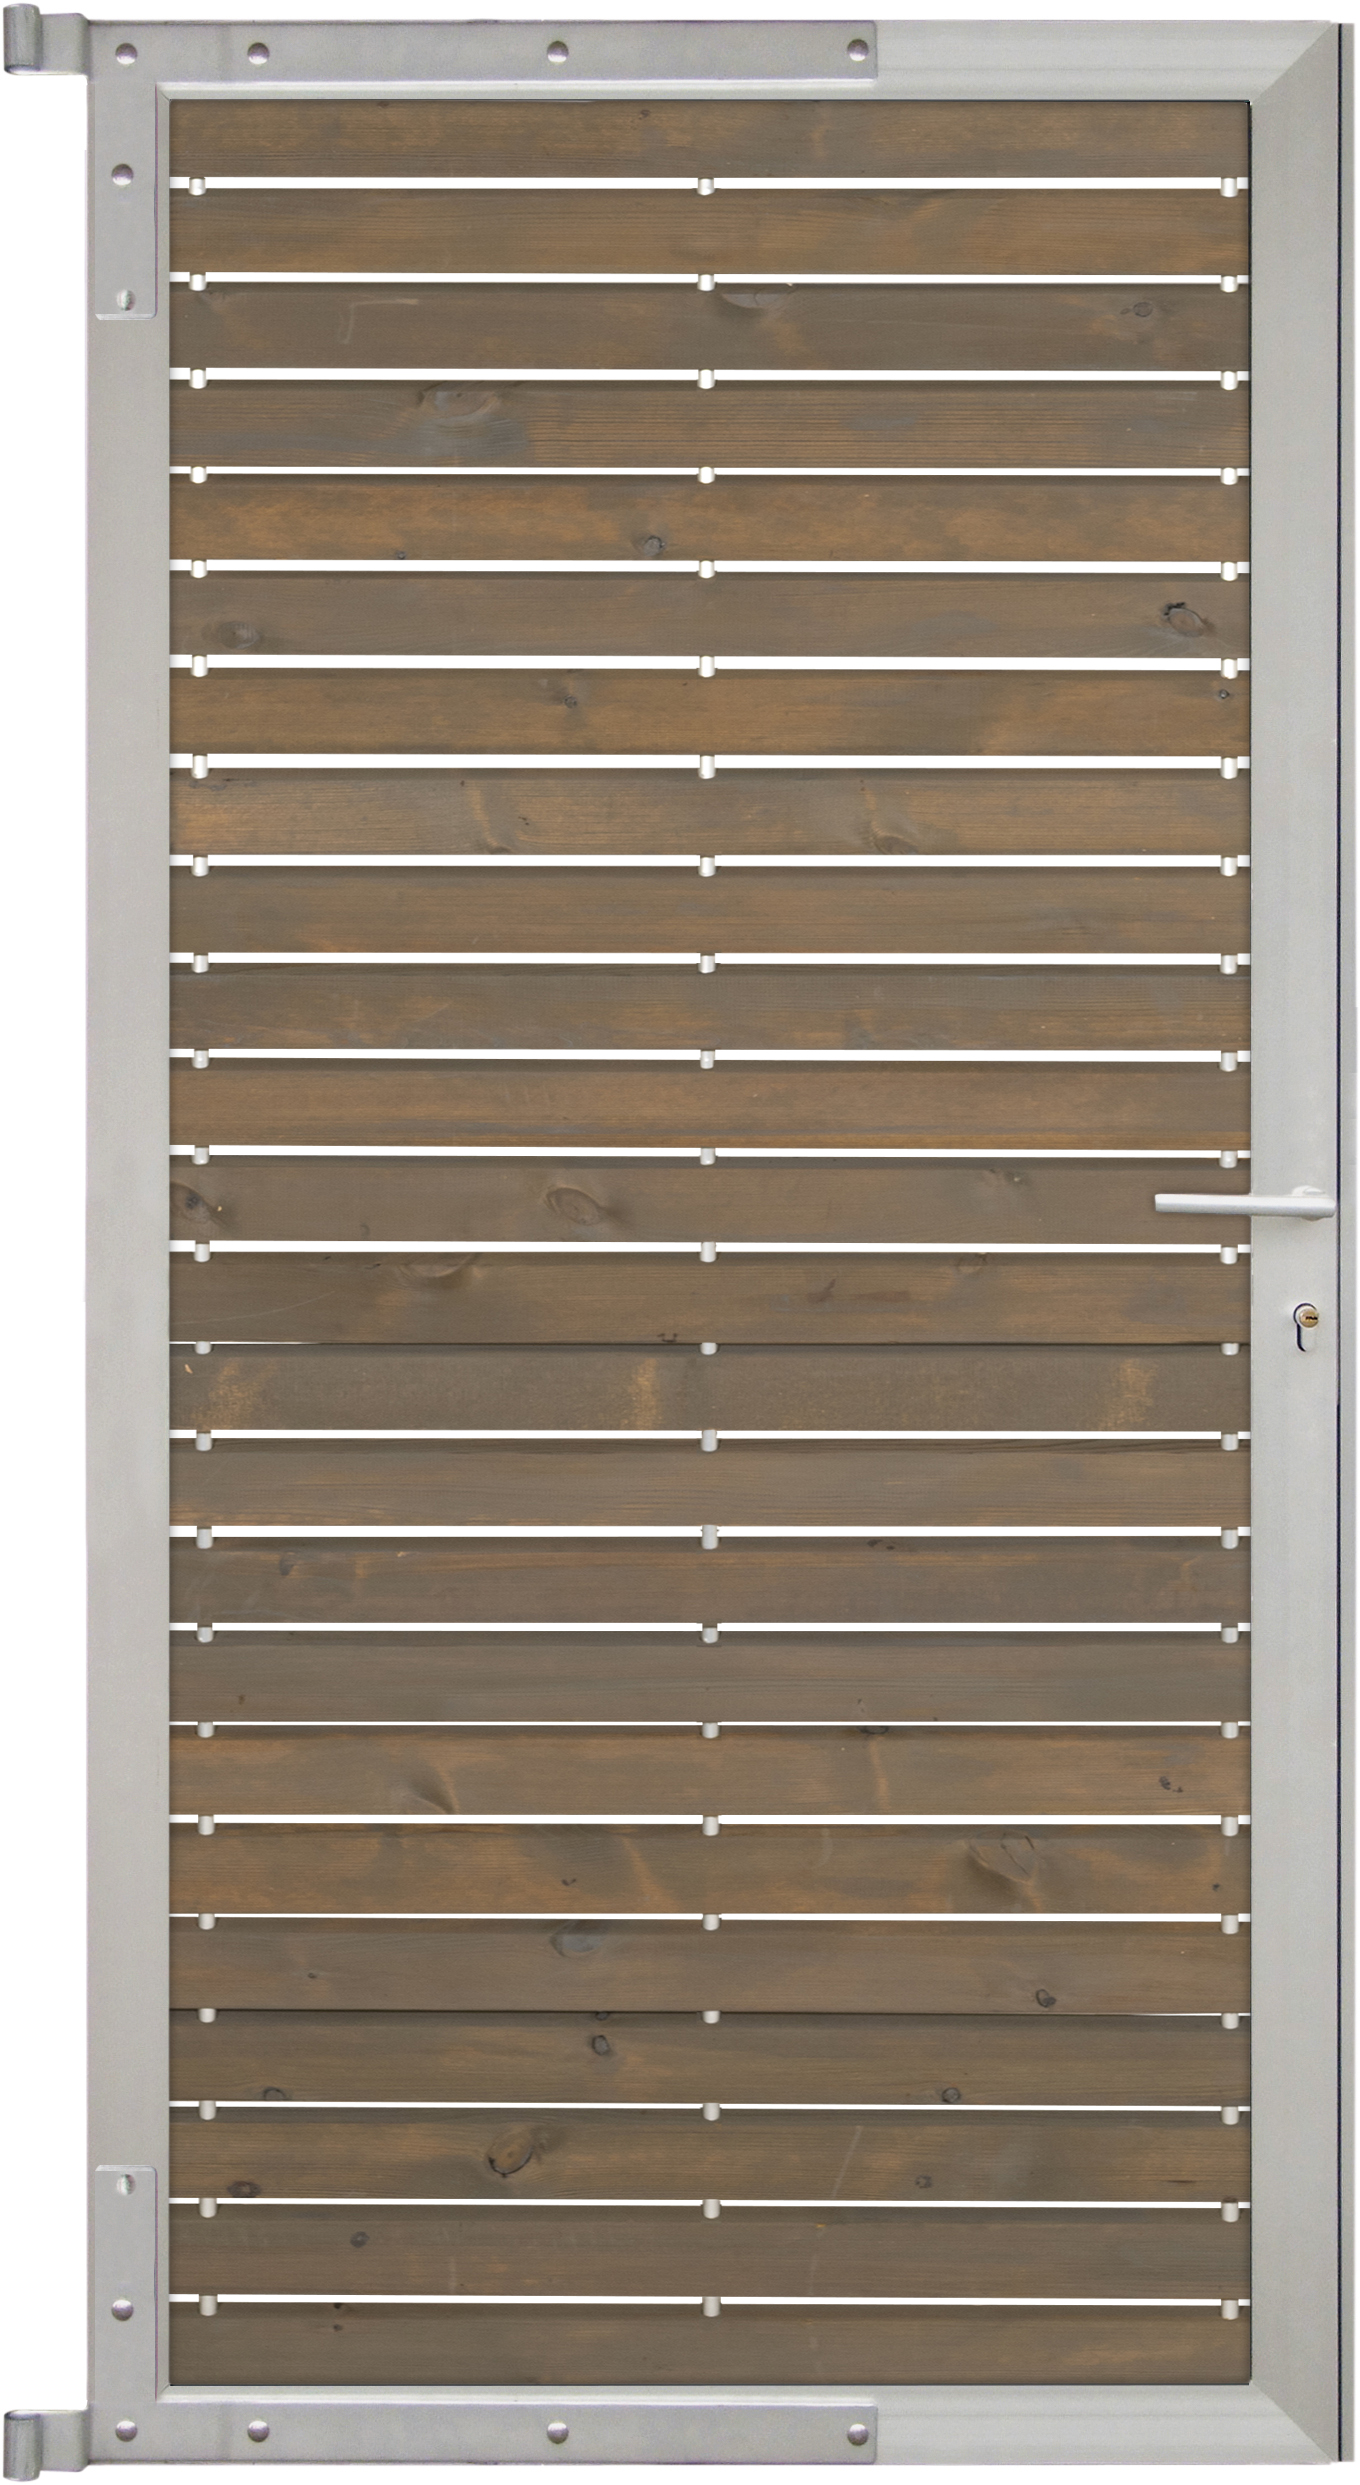 Rhombus-Steckzaun Craftwood Kiefer Grau/silber, Zauntor 90x180 cm, mit Aluminium Rahmen, inkl. Beschlagsatz in silber  